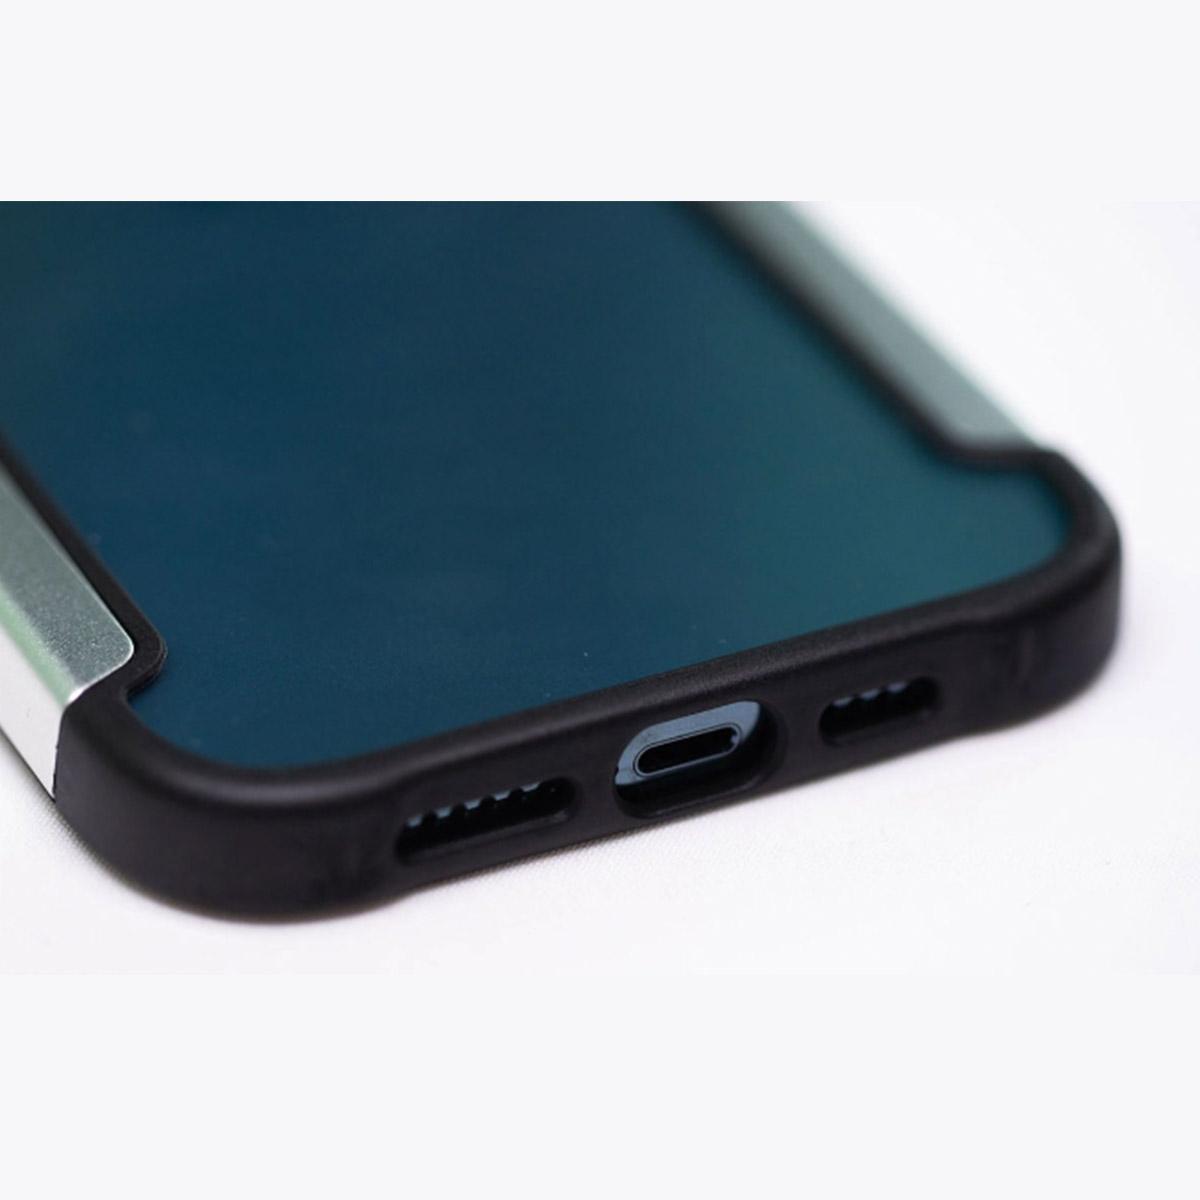 G-Case Draven Case For iPhone 12 Mini